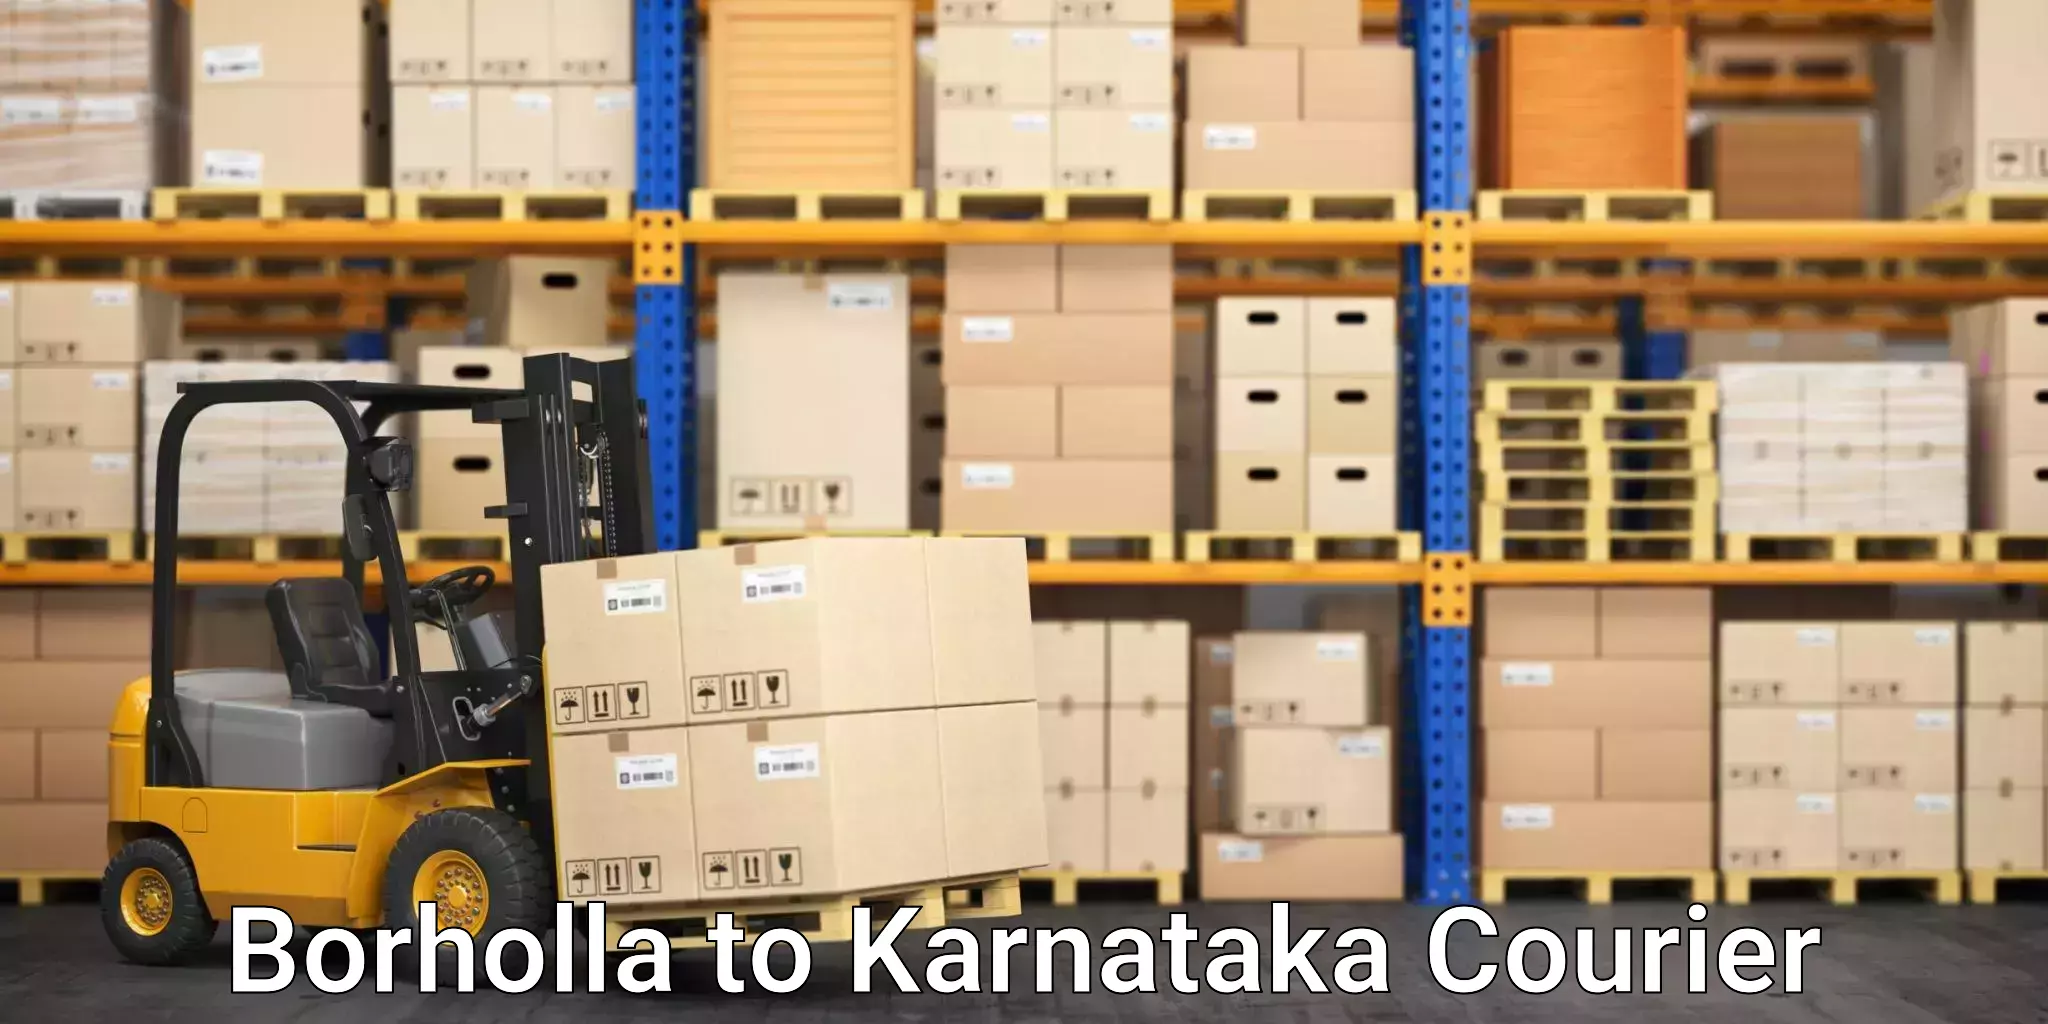 High-priority parcel service in Borholla to Karnataka